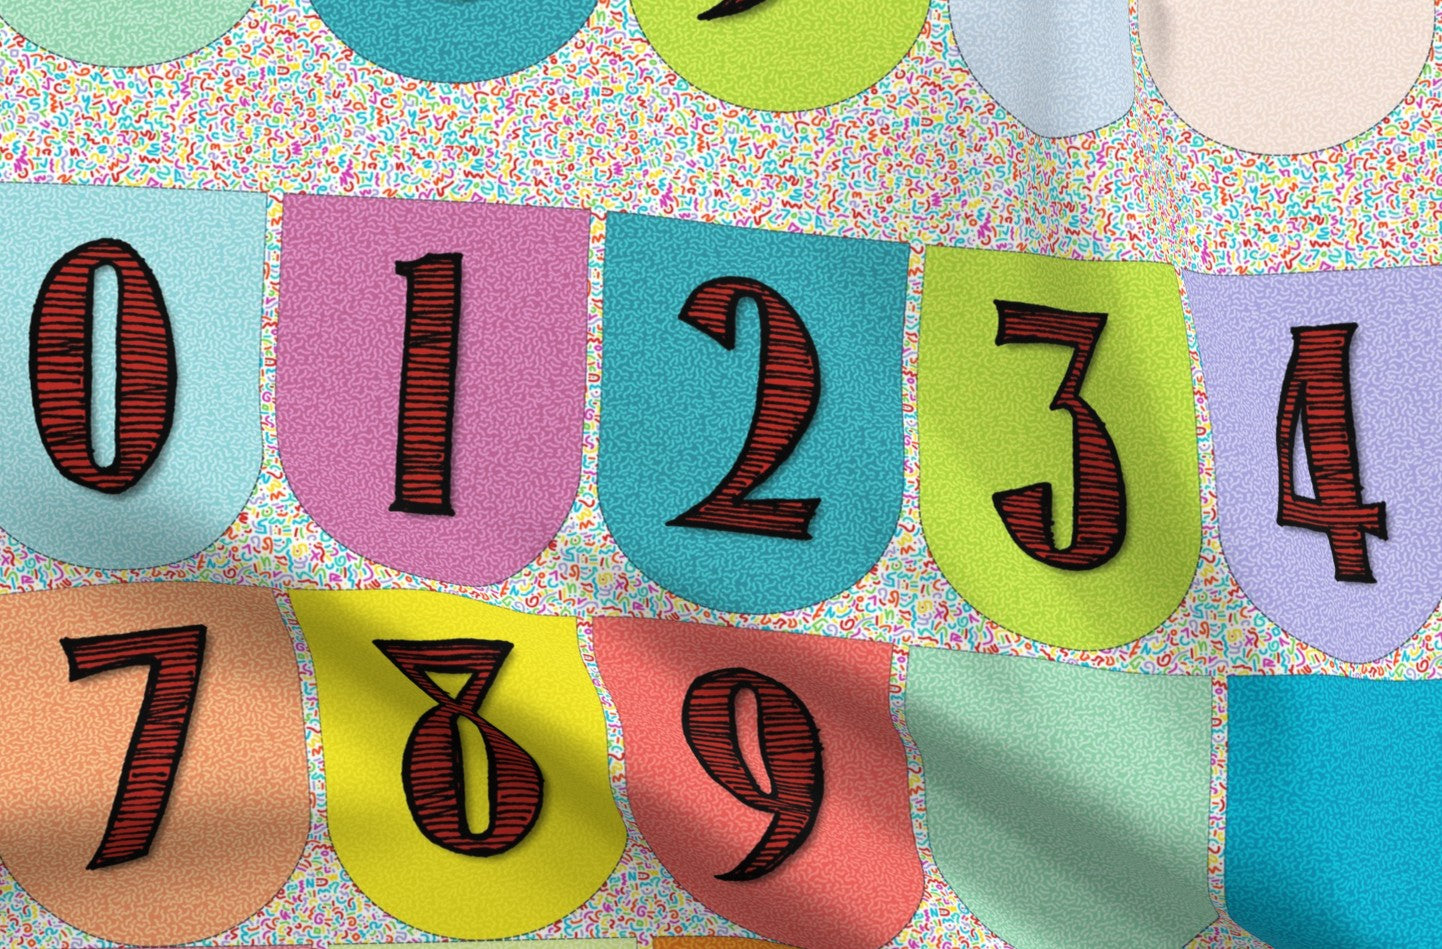 Numbers Banner Printed Fabric by Studio Ten Design